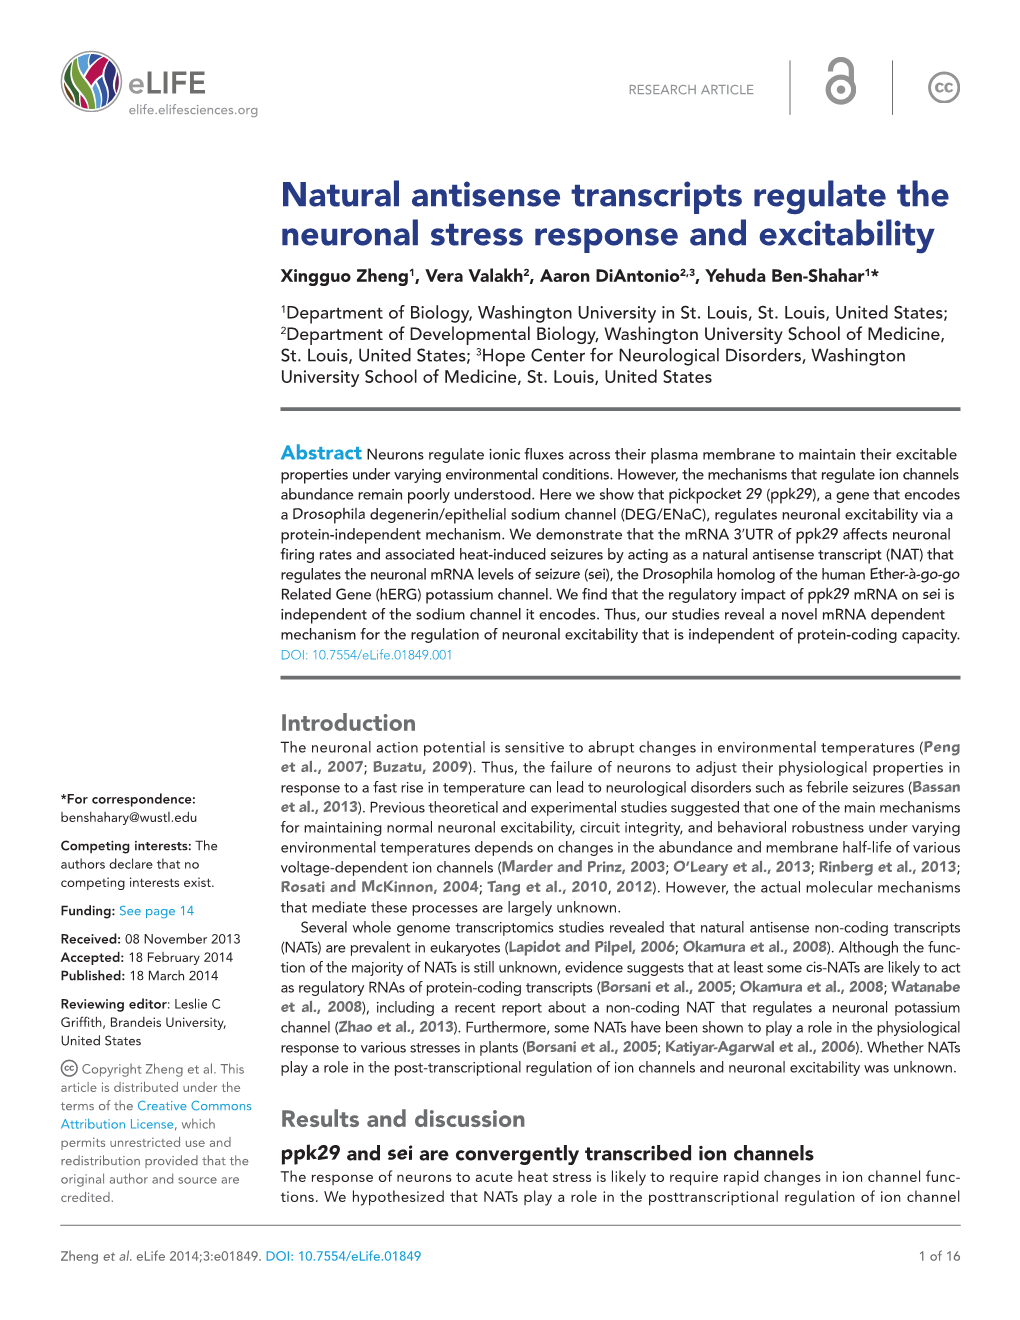 Natural Antisense Transcripts Regulate the Neuronal Stress Response and Excitability Xingguo Zheng1, Vera Valakh2, Aaron Diantonio2,3, Yehuda Ben-Shahar1*